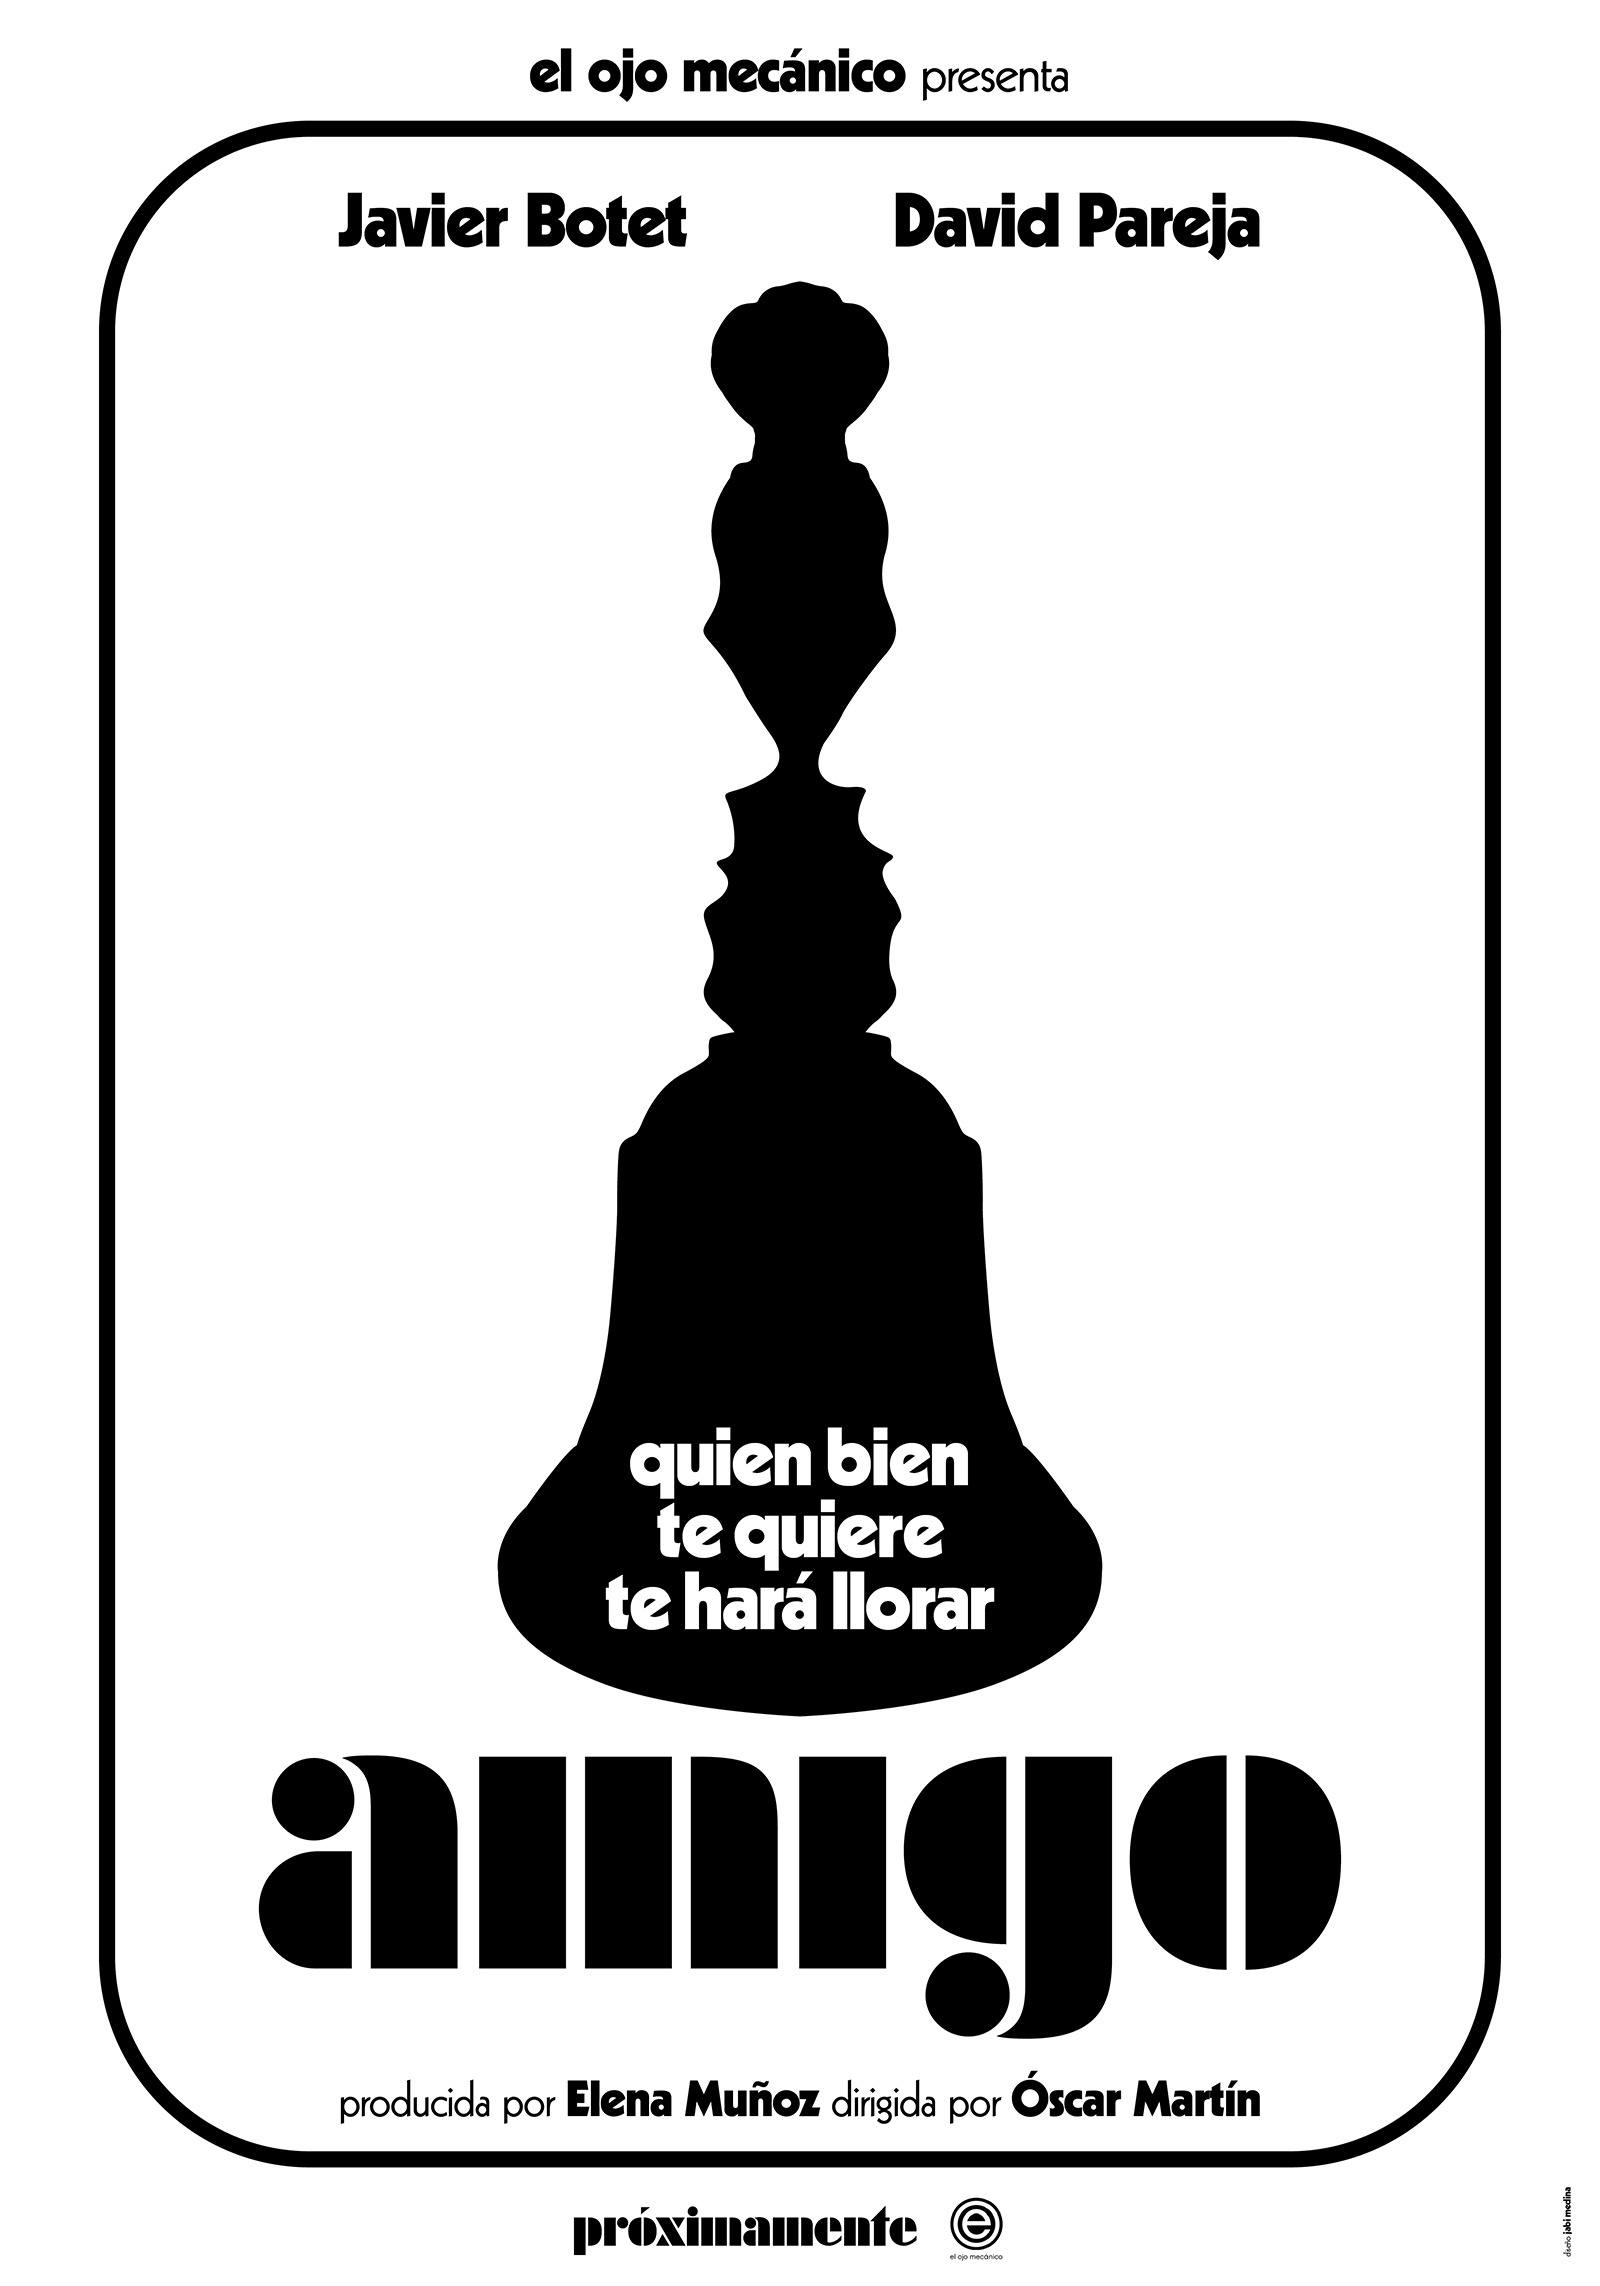 Mega Sized Movie Poster Image for Amigo (#1 of 5)